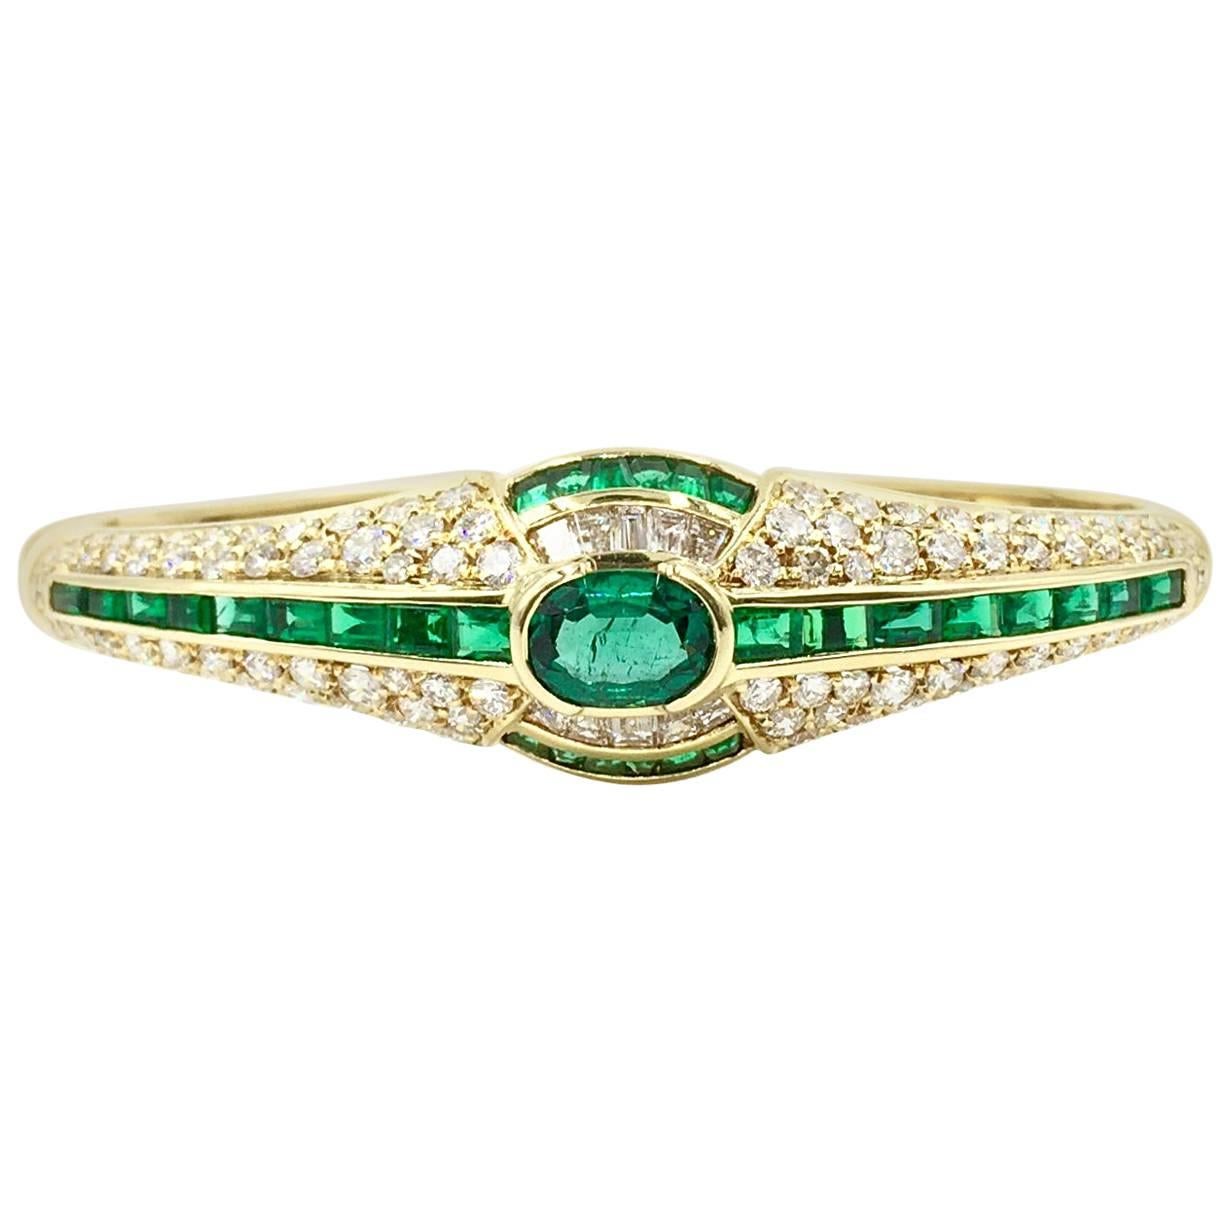 Emerald and Approximate 3.50 Carat Diamond 18 Karat Yellow Gold Bangle Bracelet